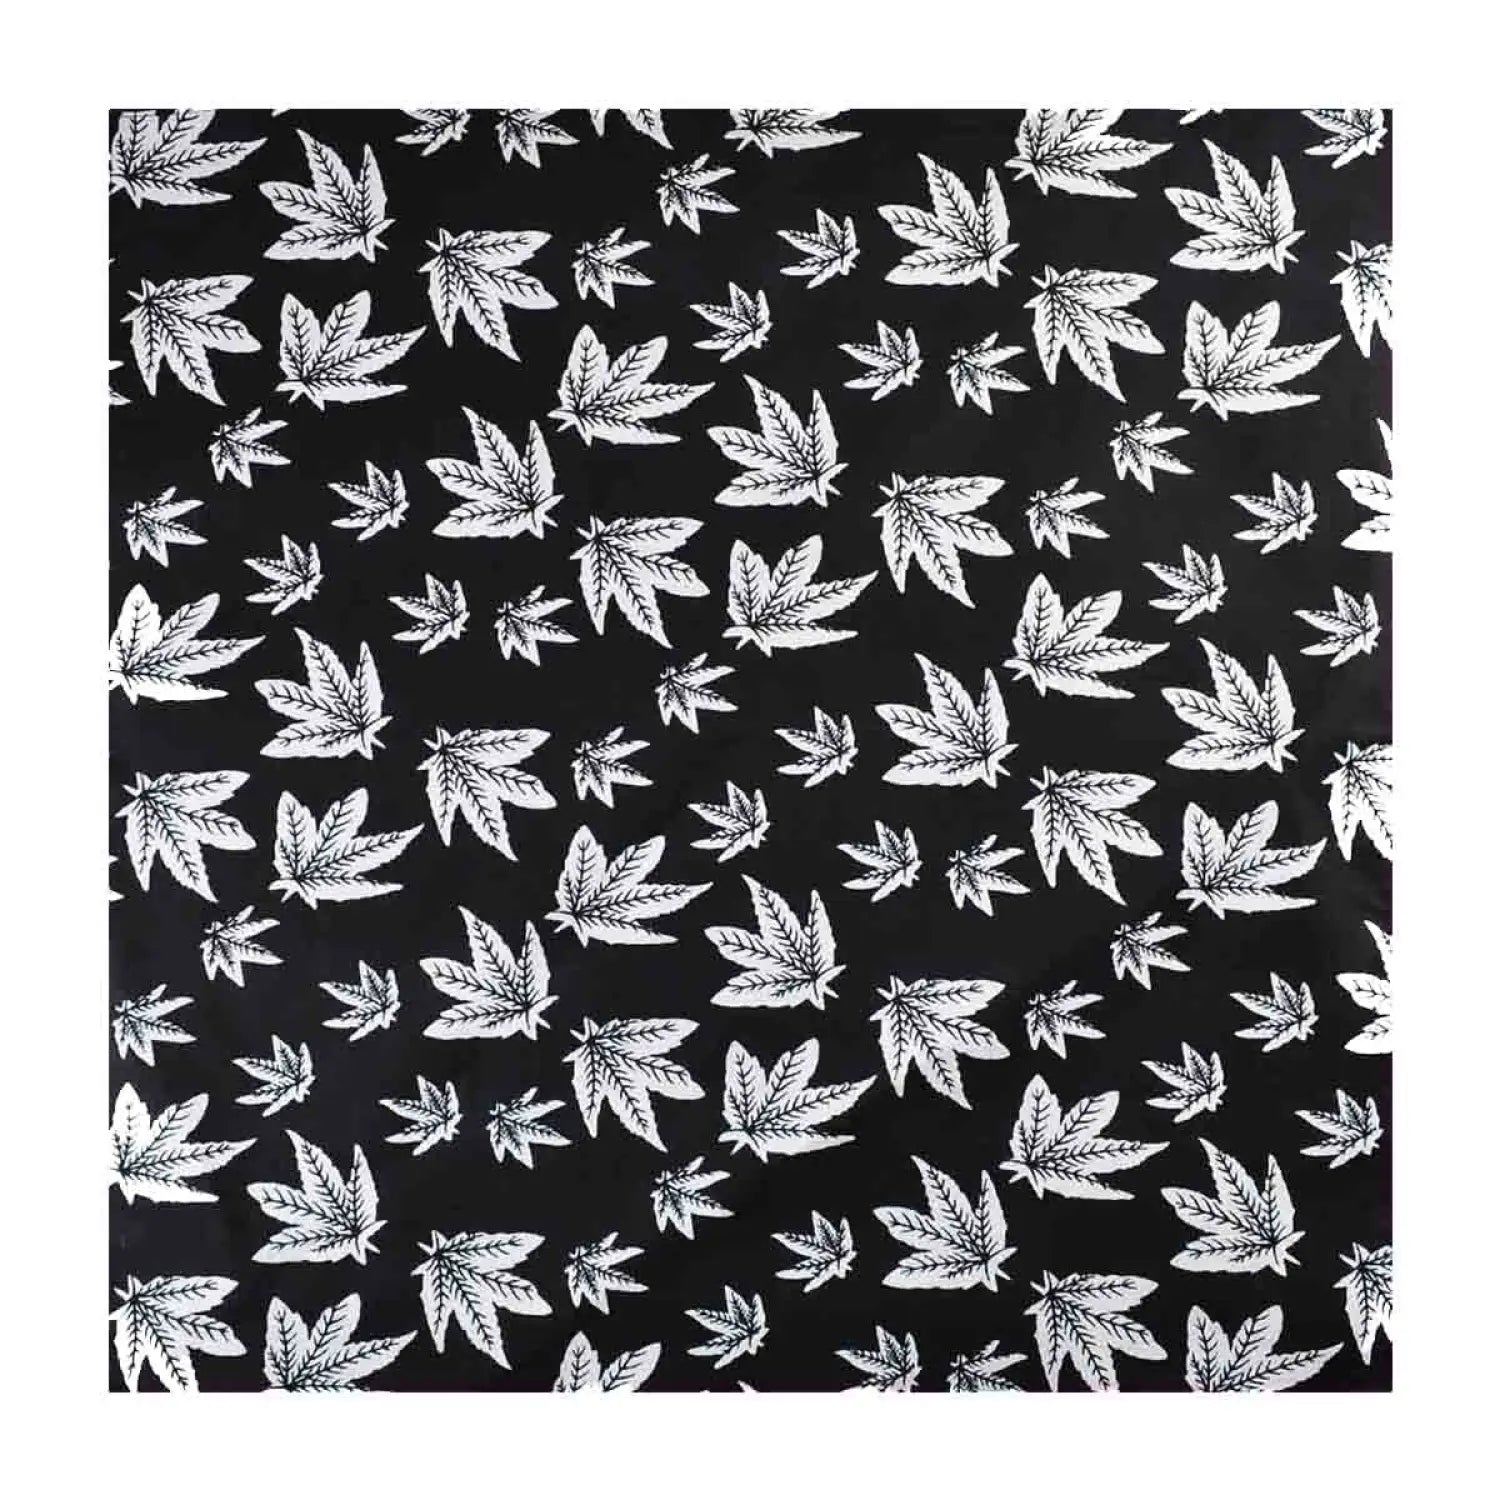 Unisex Tropical Leaf Print Scarf in 100% Cotton